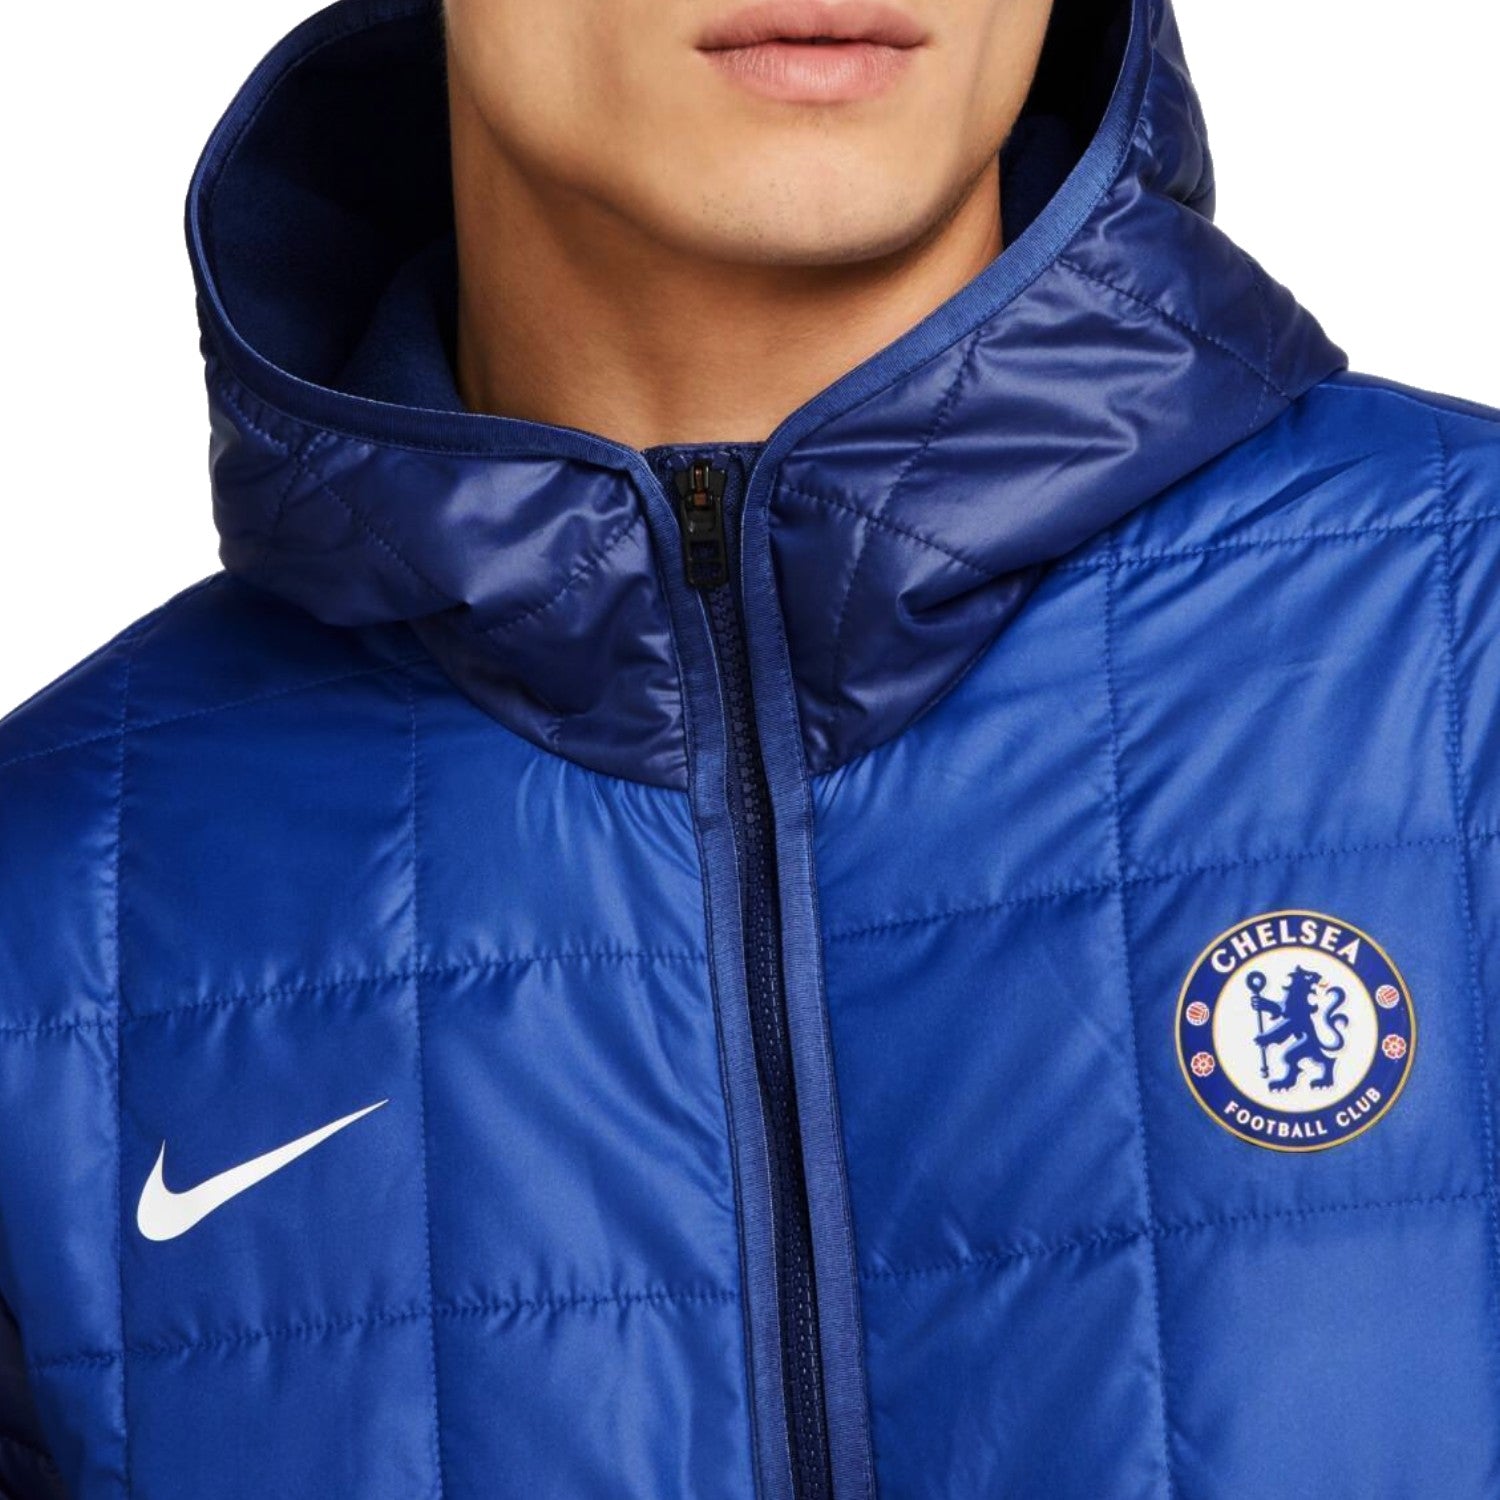 Chelsea presentation bomber jacket 2021/22 Nike – SoccerTracksuits.com